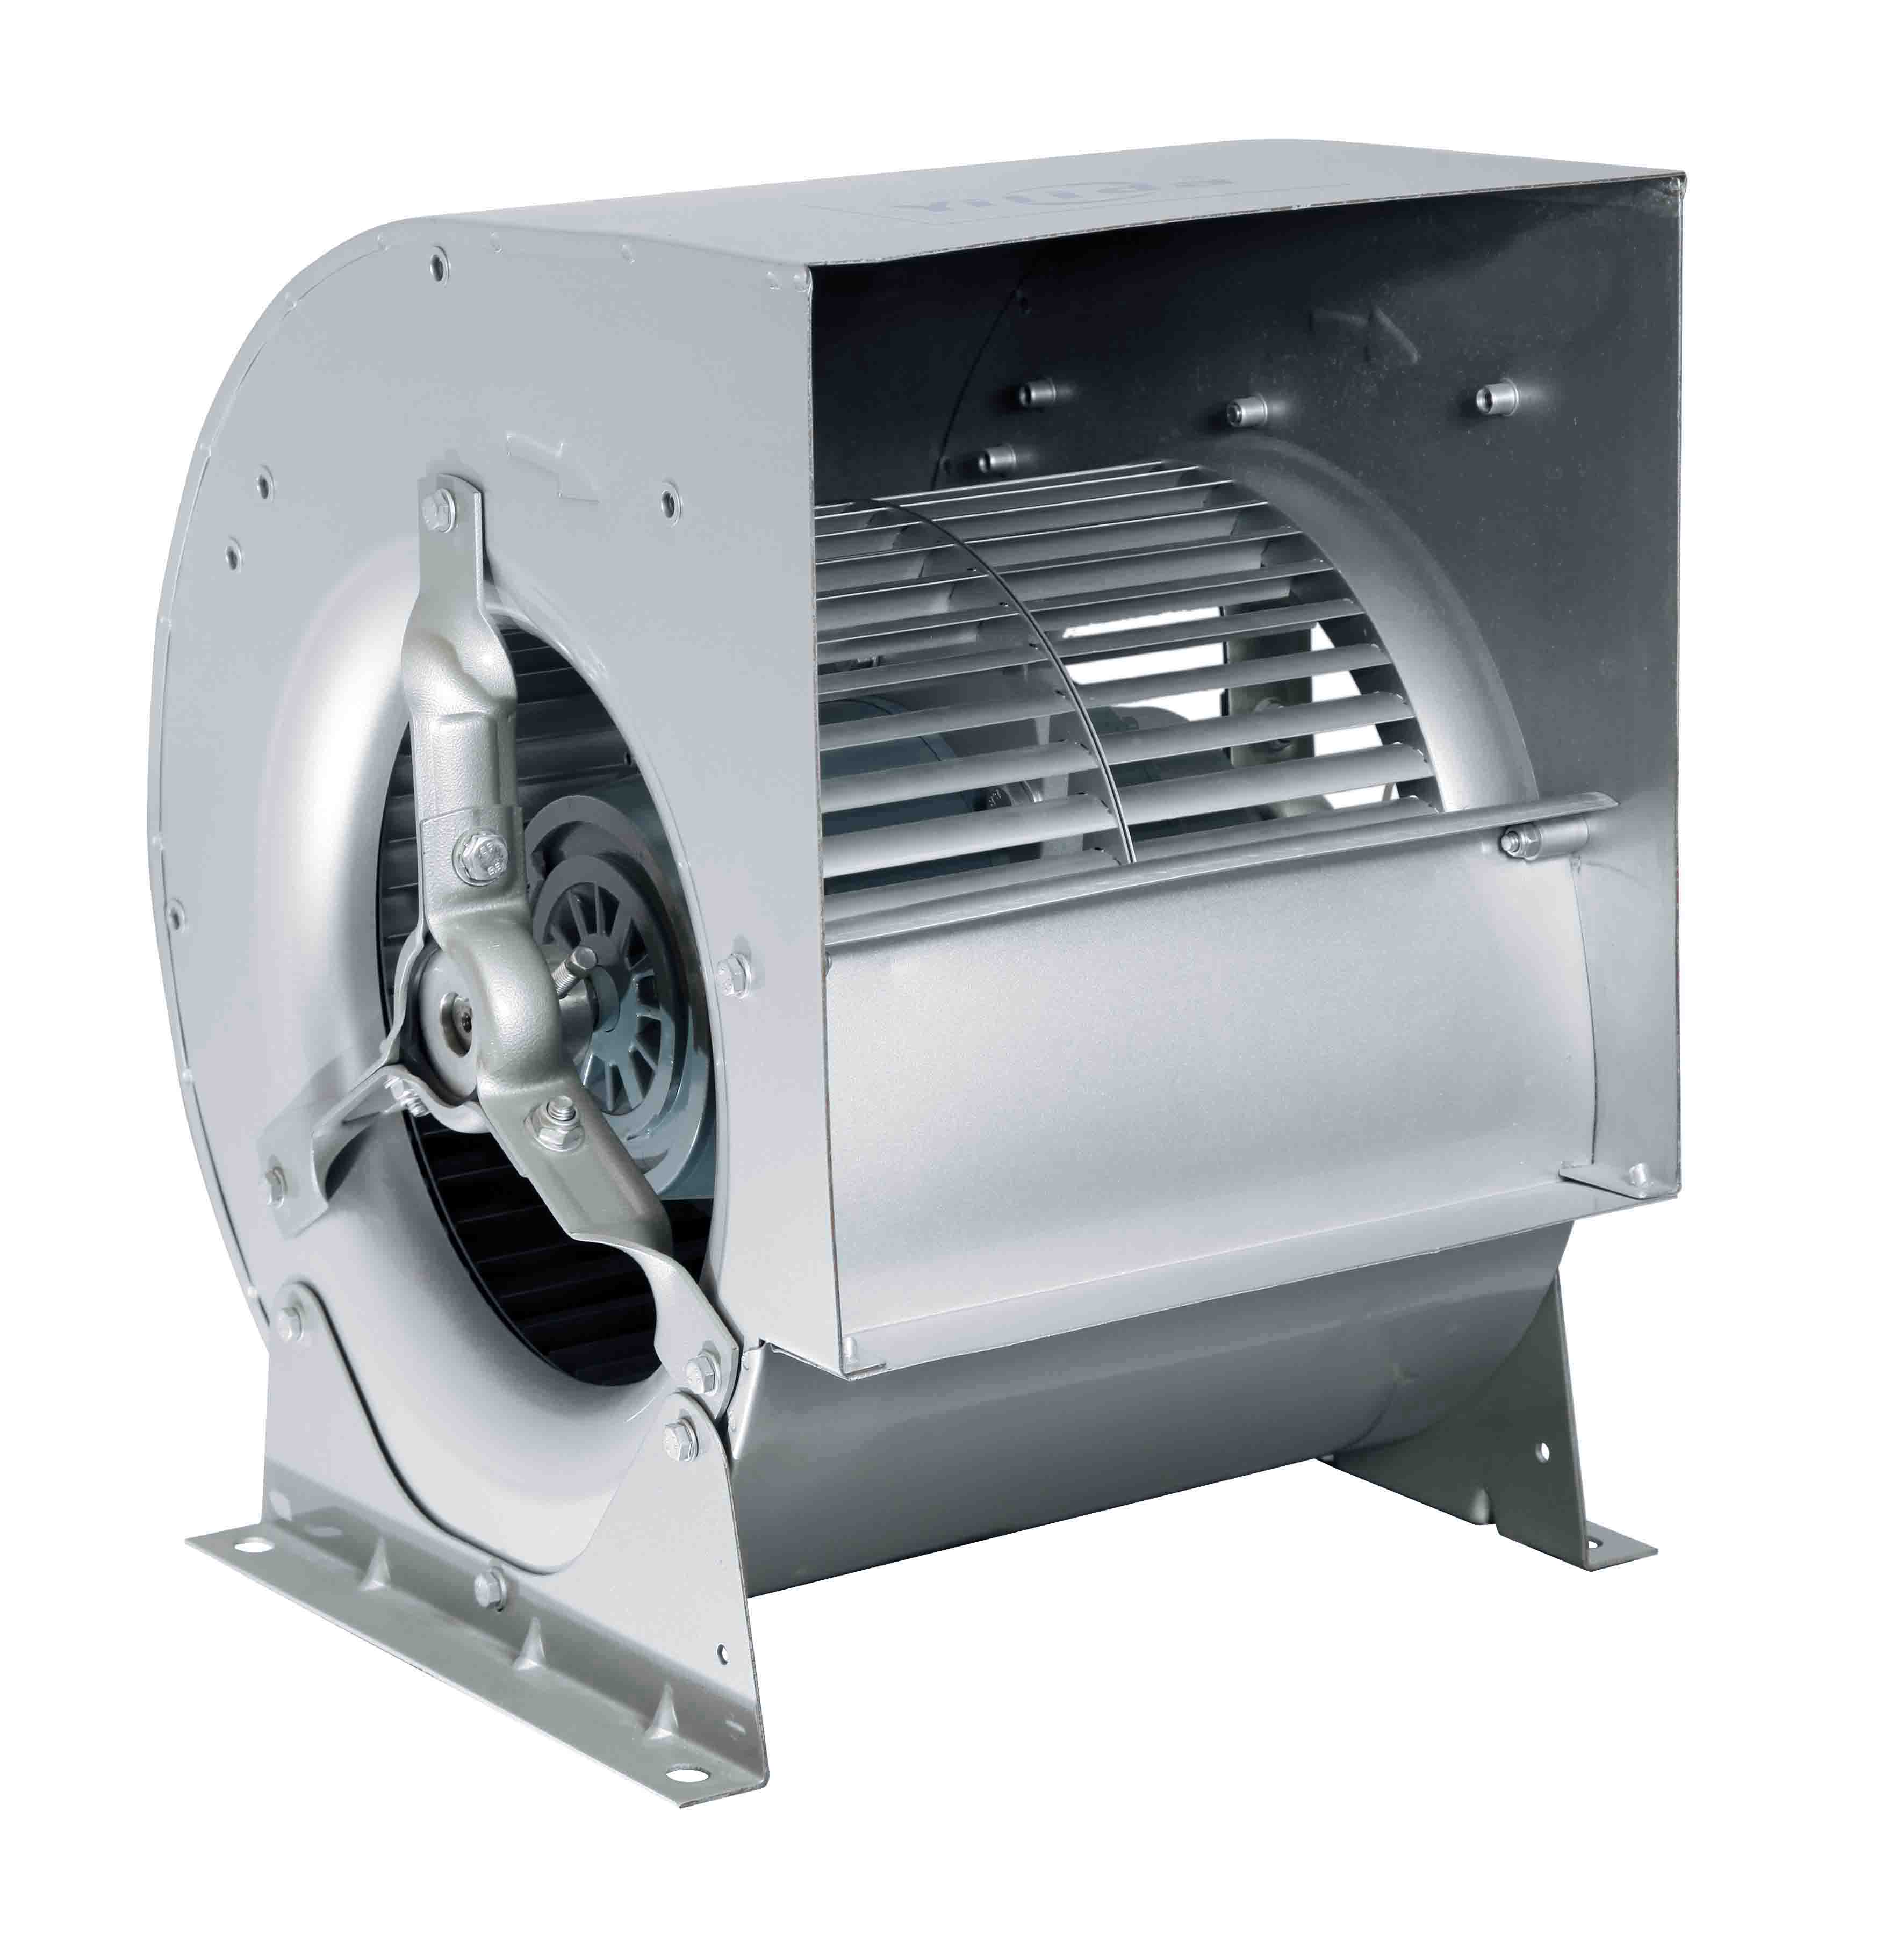 Ventilateurs centrifuges pour AHU, FFU, MAU, système HVAC Featured Image